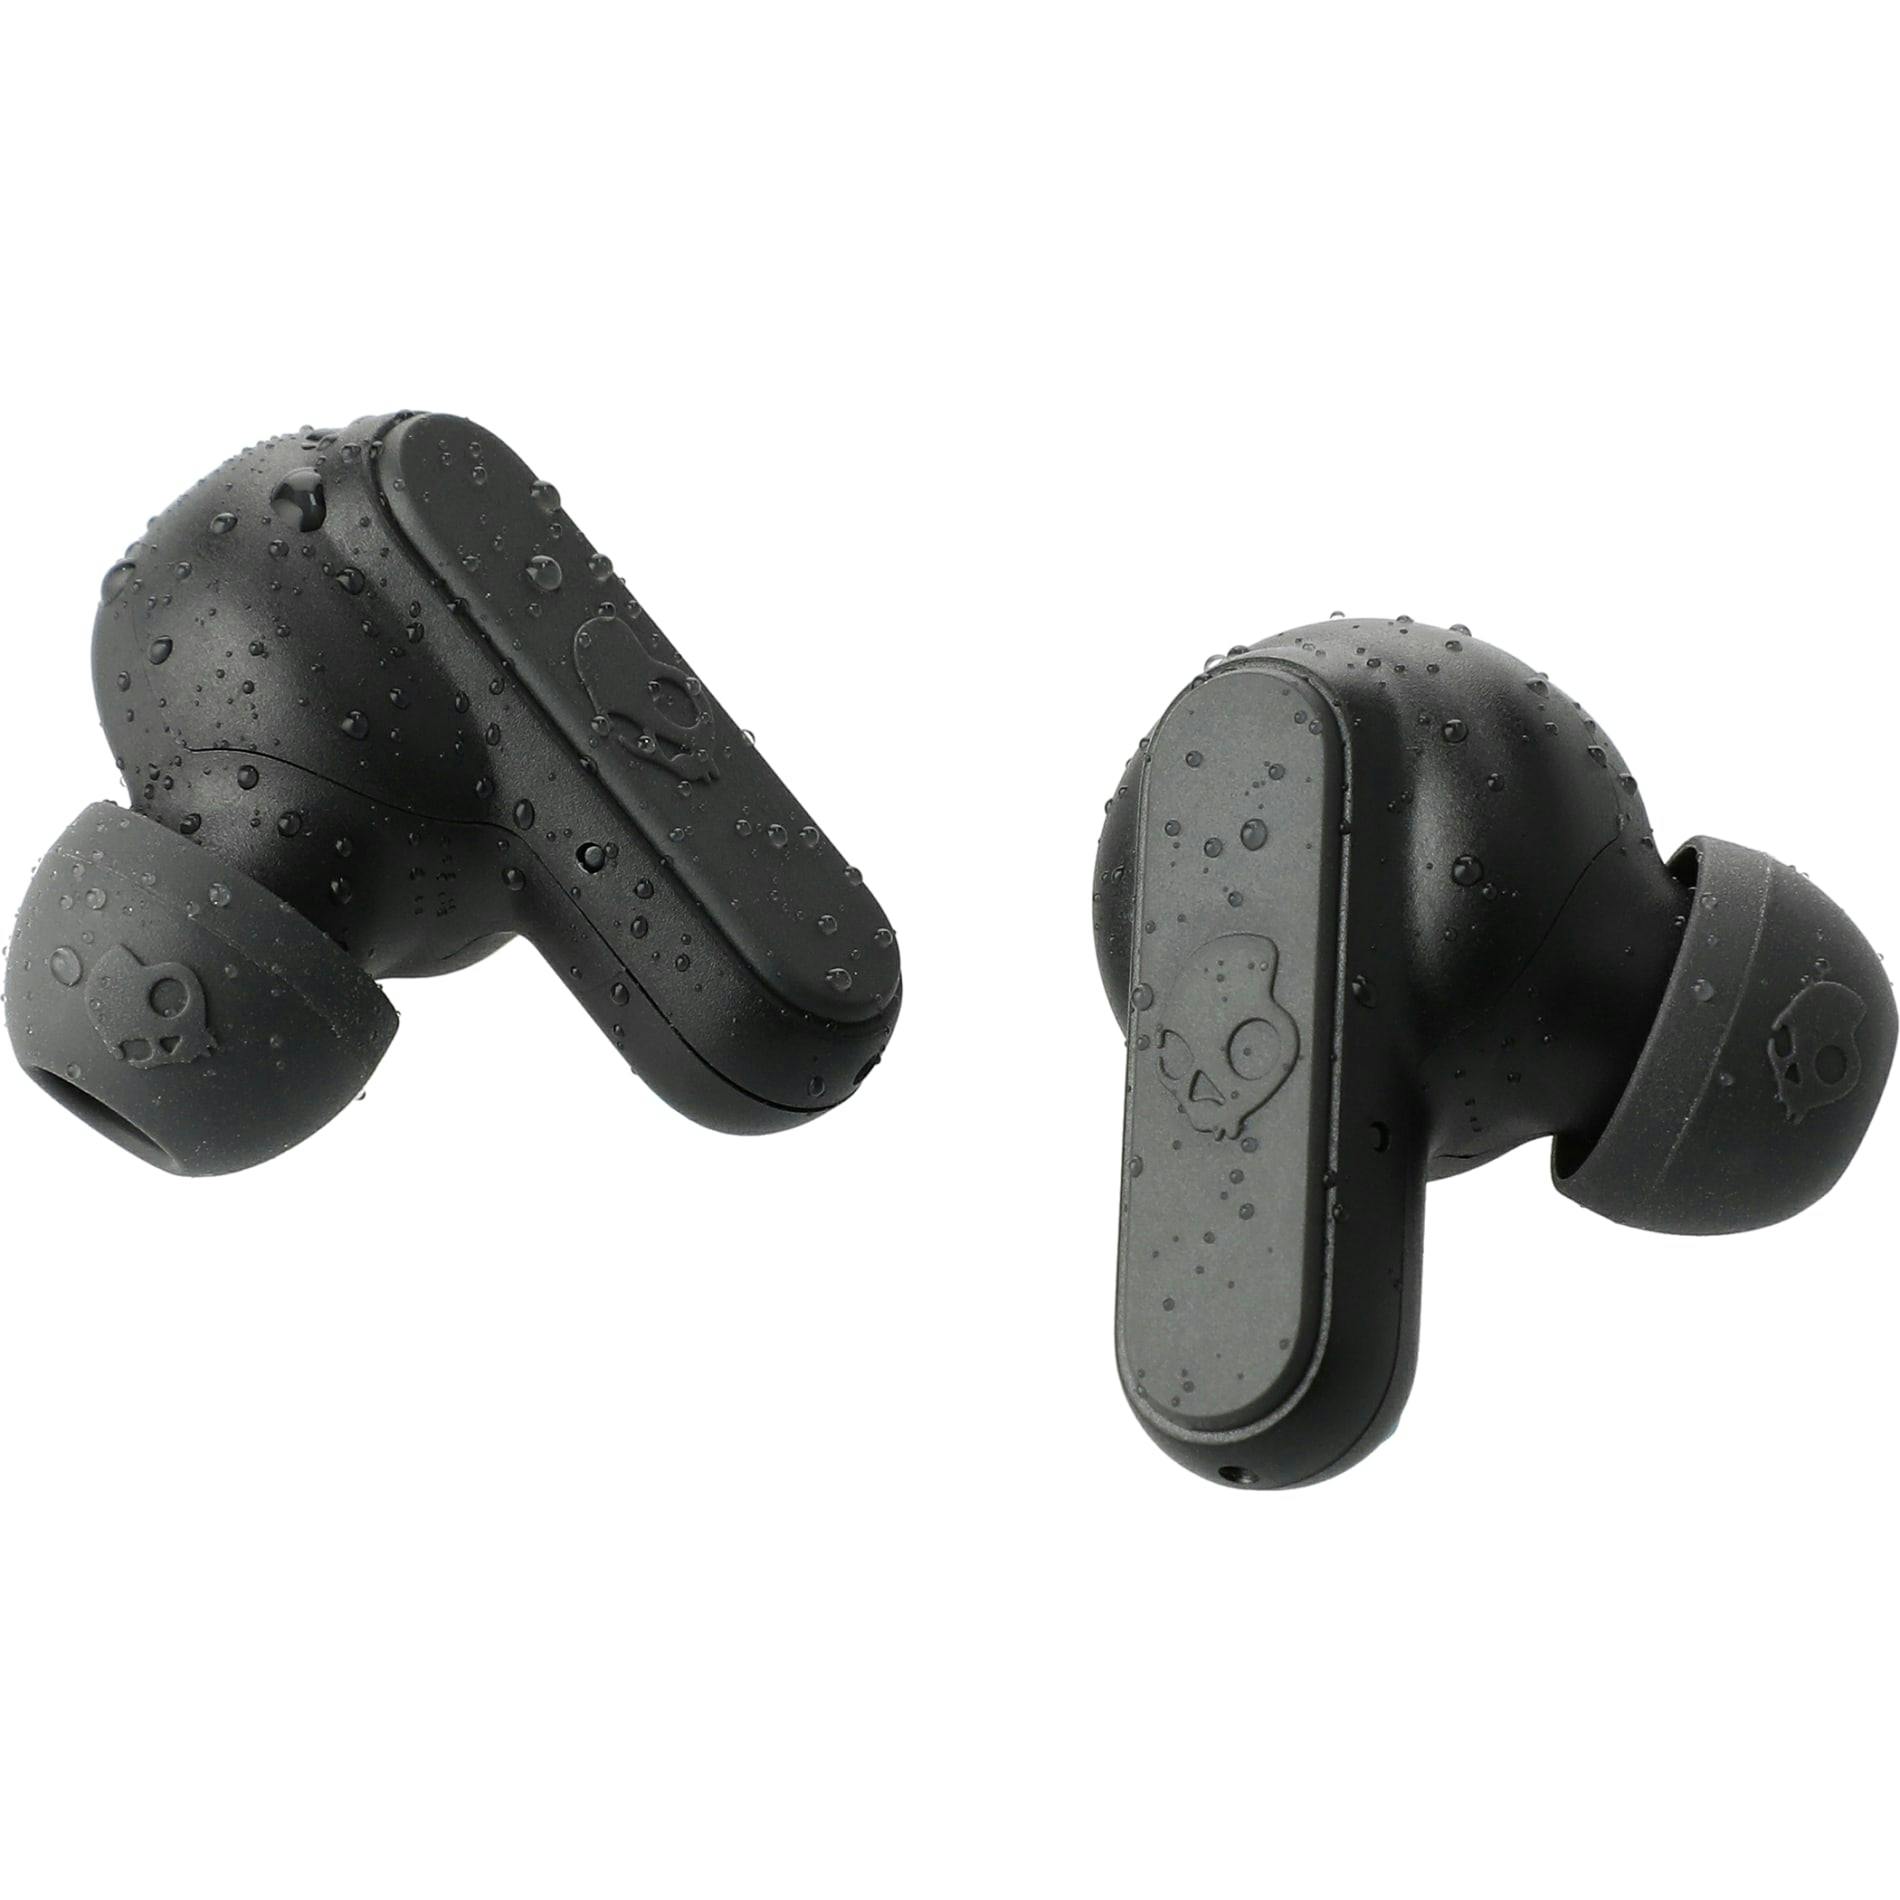 Skullcandy Dime 2 True Wireless Earbuds - additional Image 2